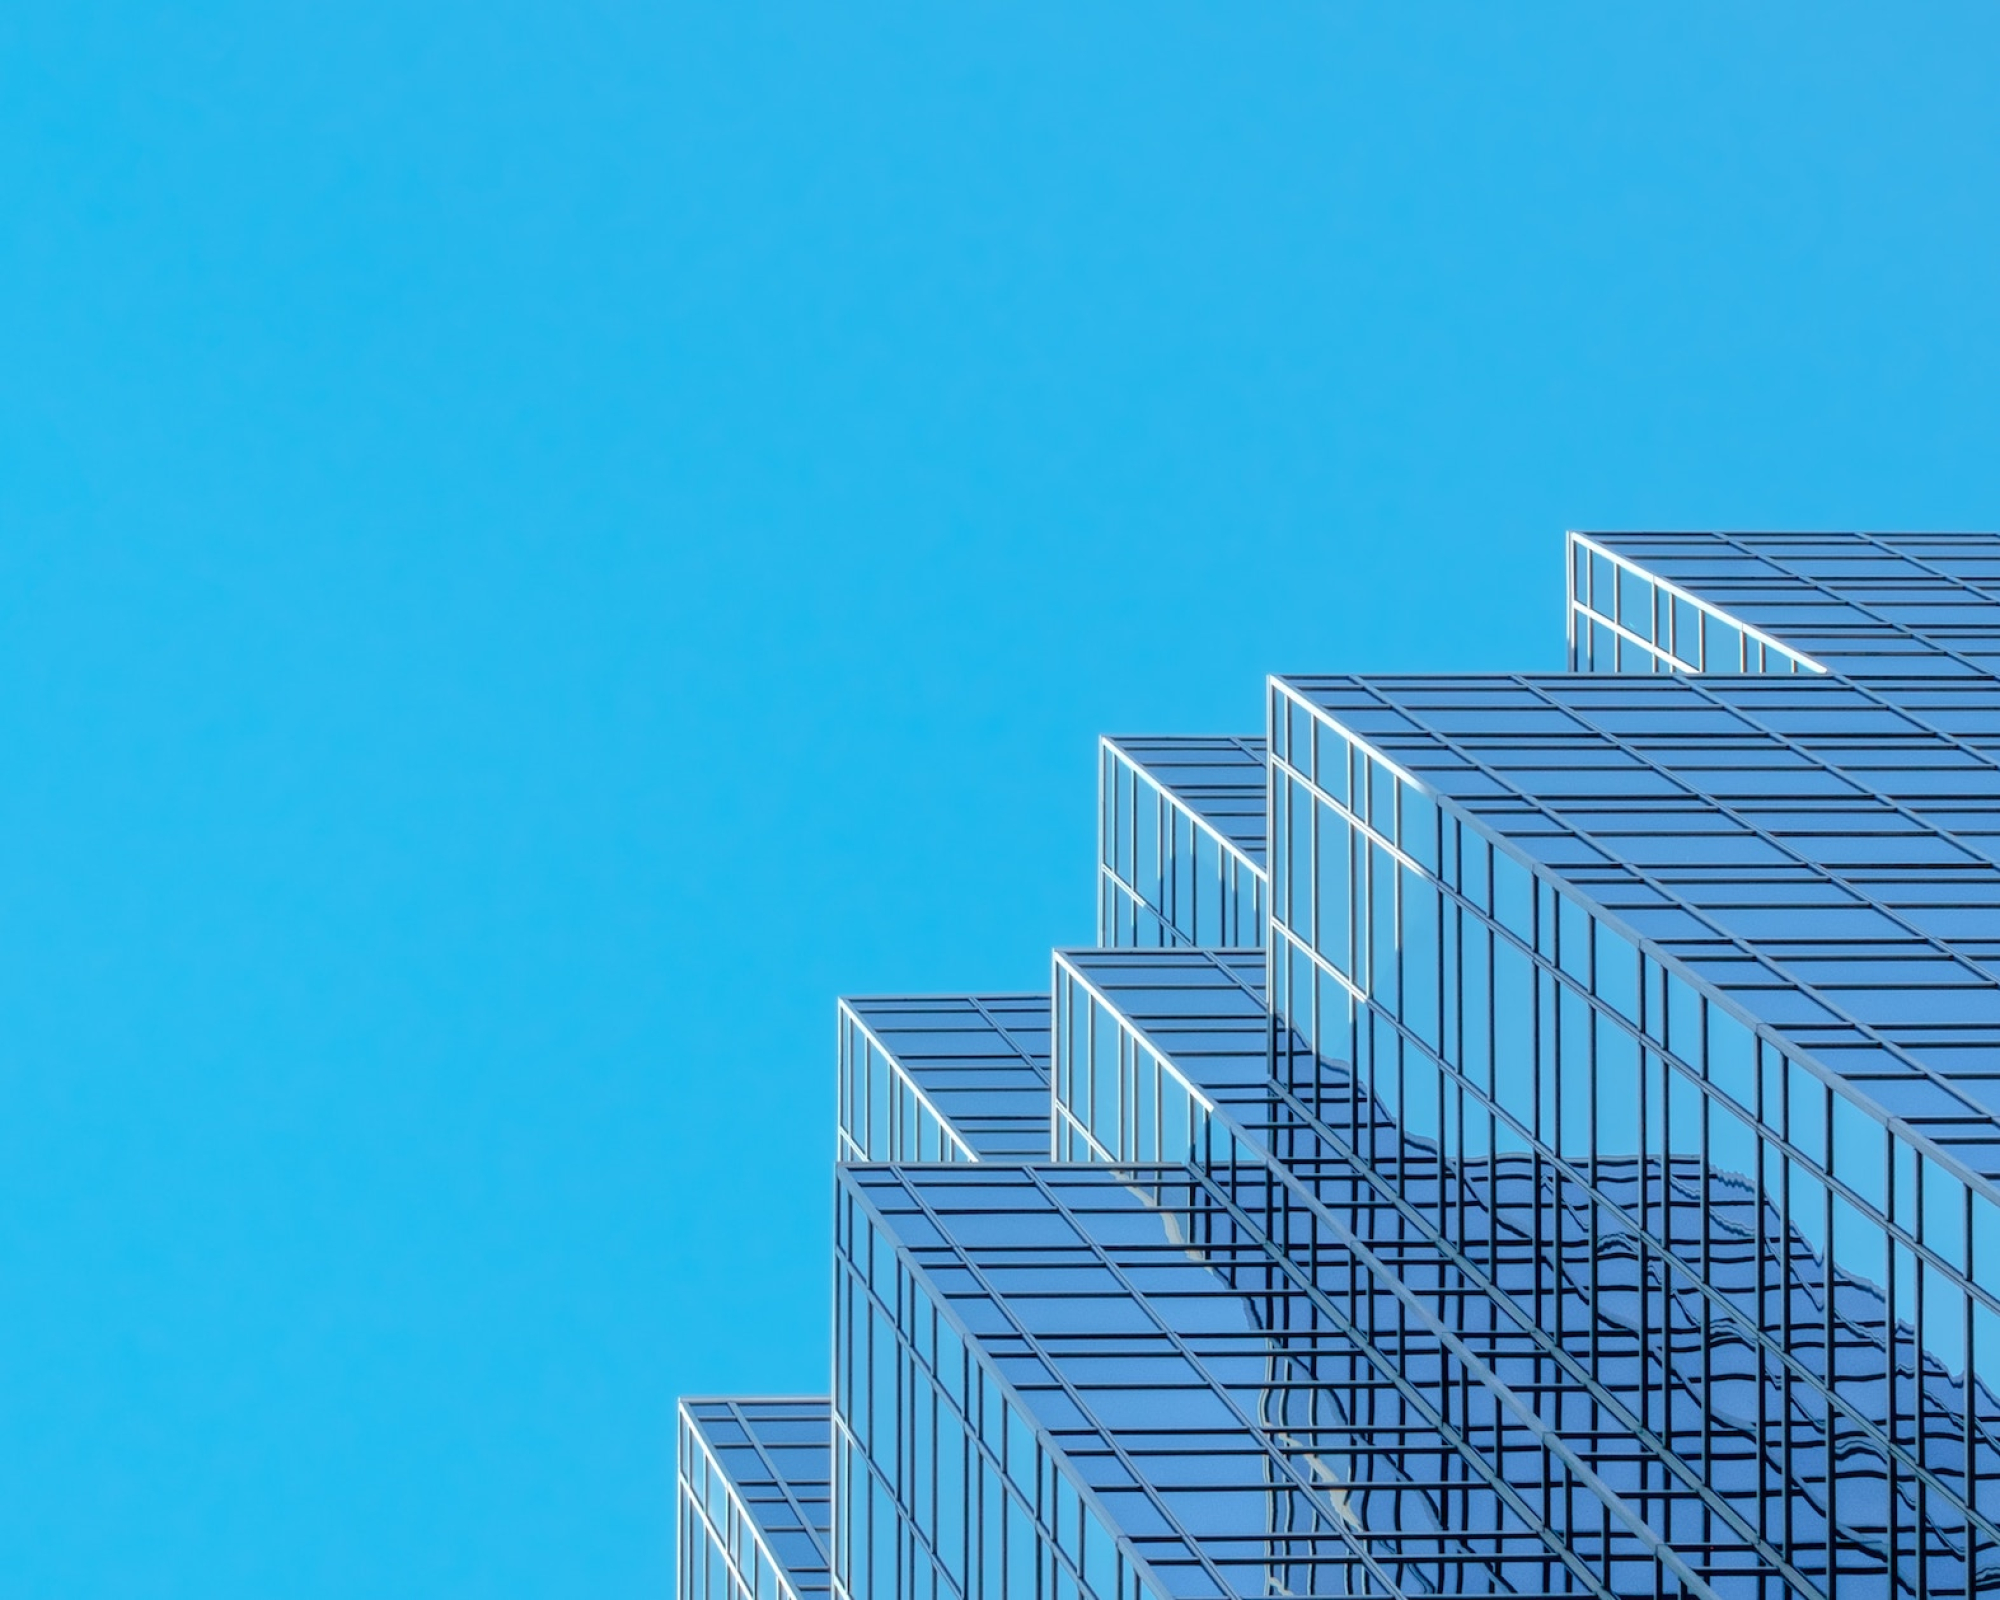 Upward view of glass windows of skyscraper against clear blue sky